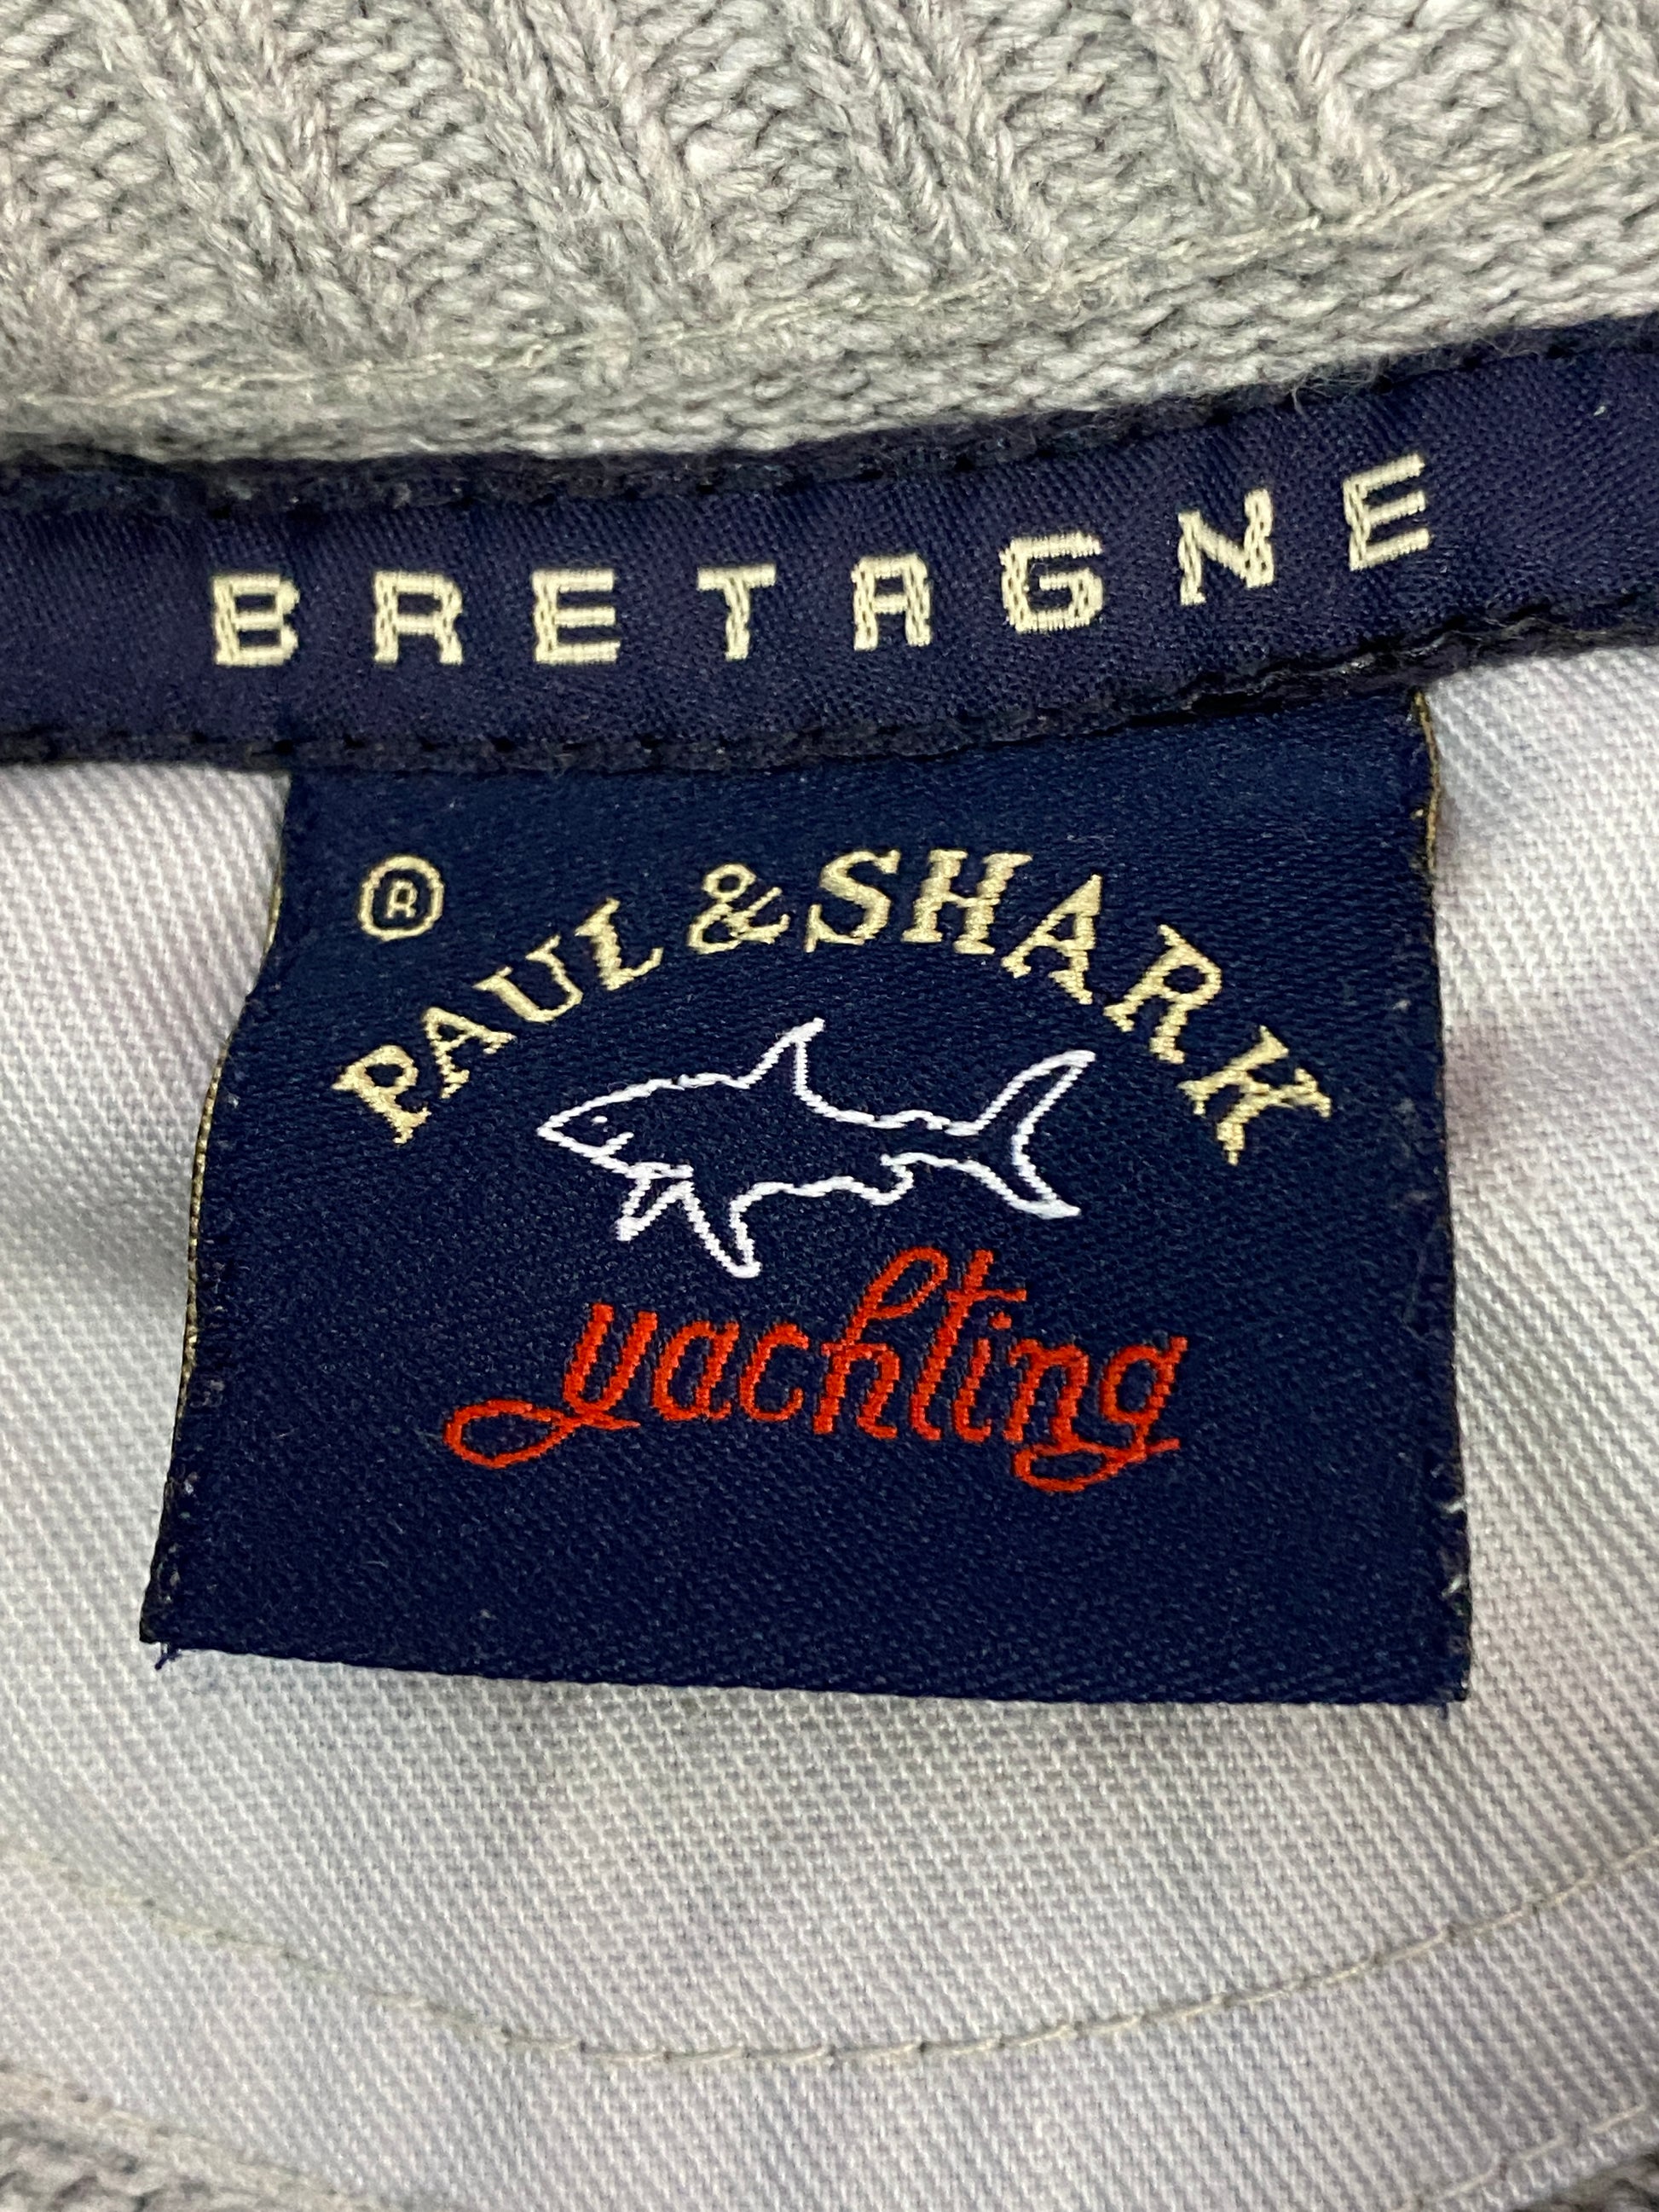 Paul&Shark Vintage Men's Sweater - Large Gray Cotton Blend